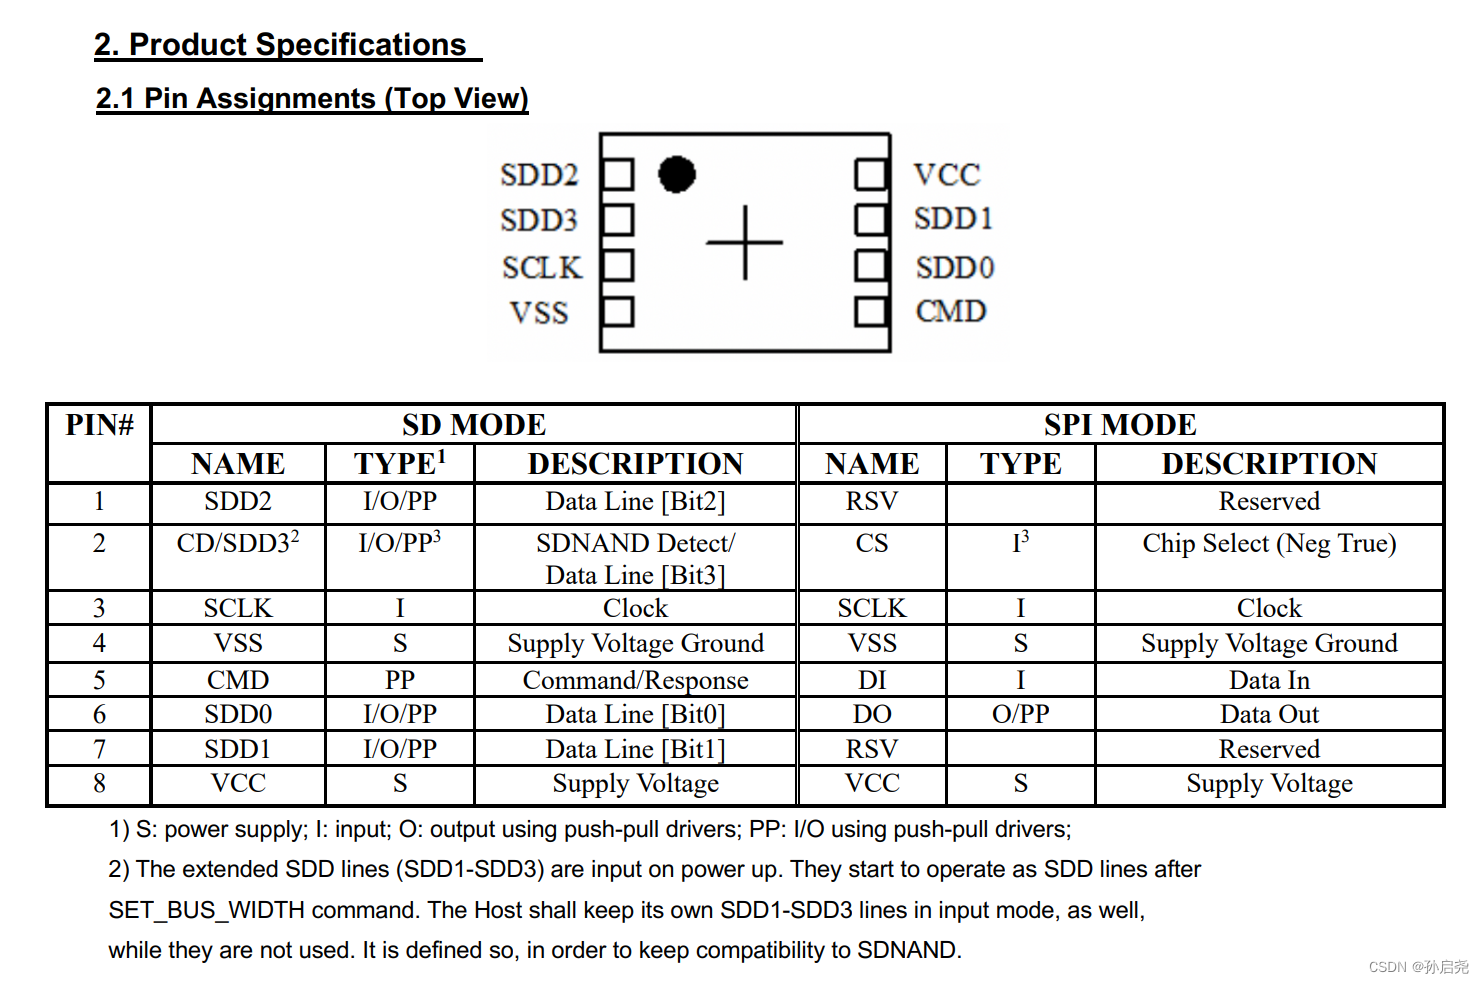 SD NAND,贴片式TF卡,贴片式SD卡,北京君正,nor flash,存储,芯片,主控,小尺寸emmc,大容量SLC Nand,语音芯片,语音识别,语音控制,语音模块,离线语音